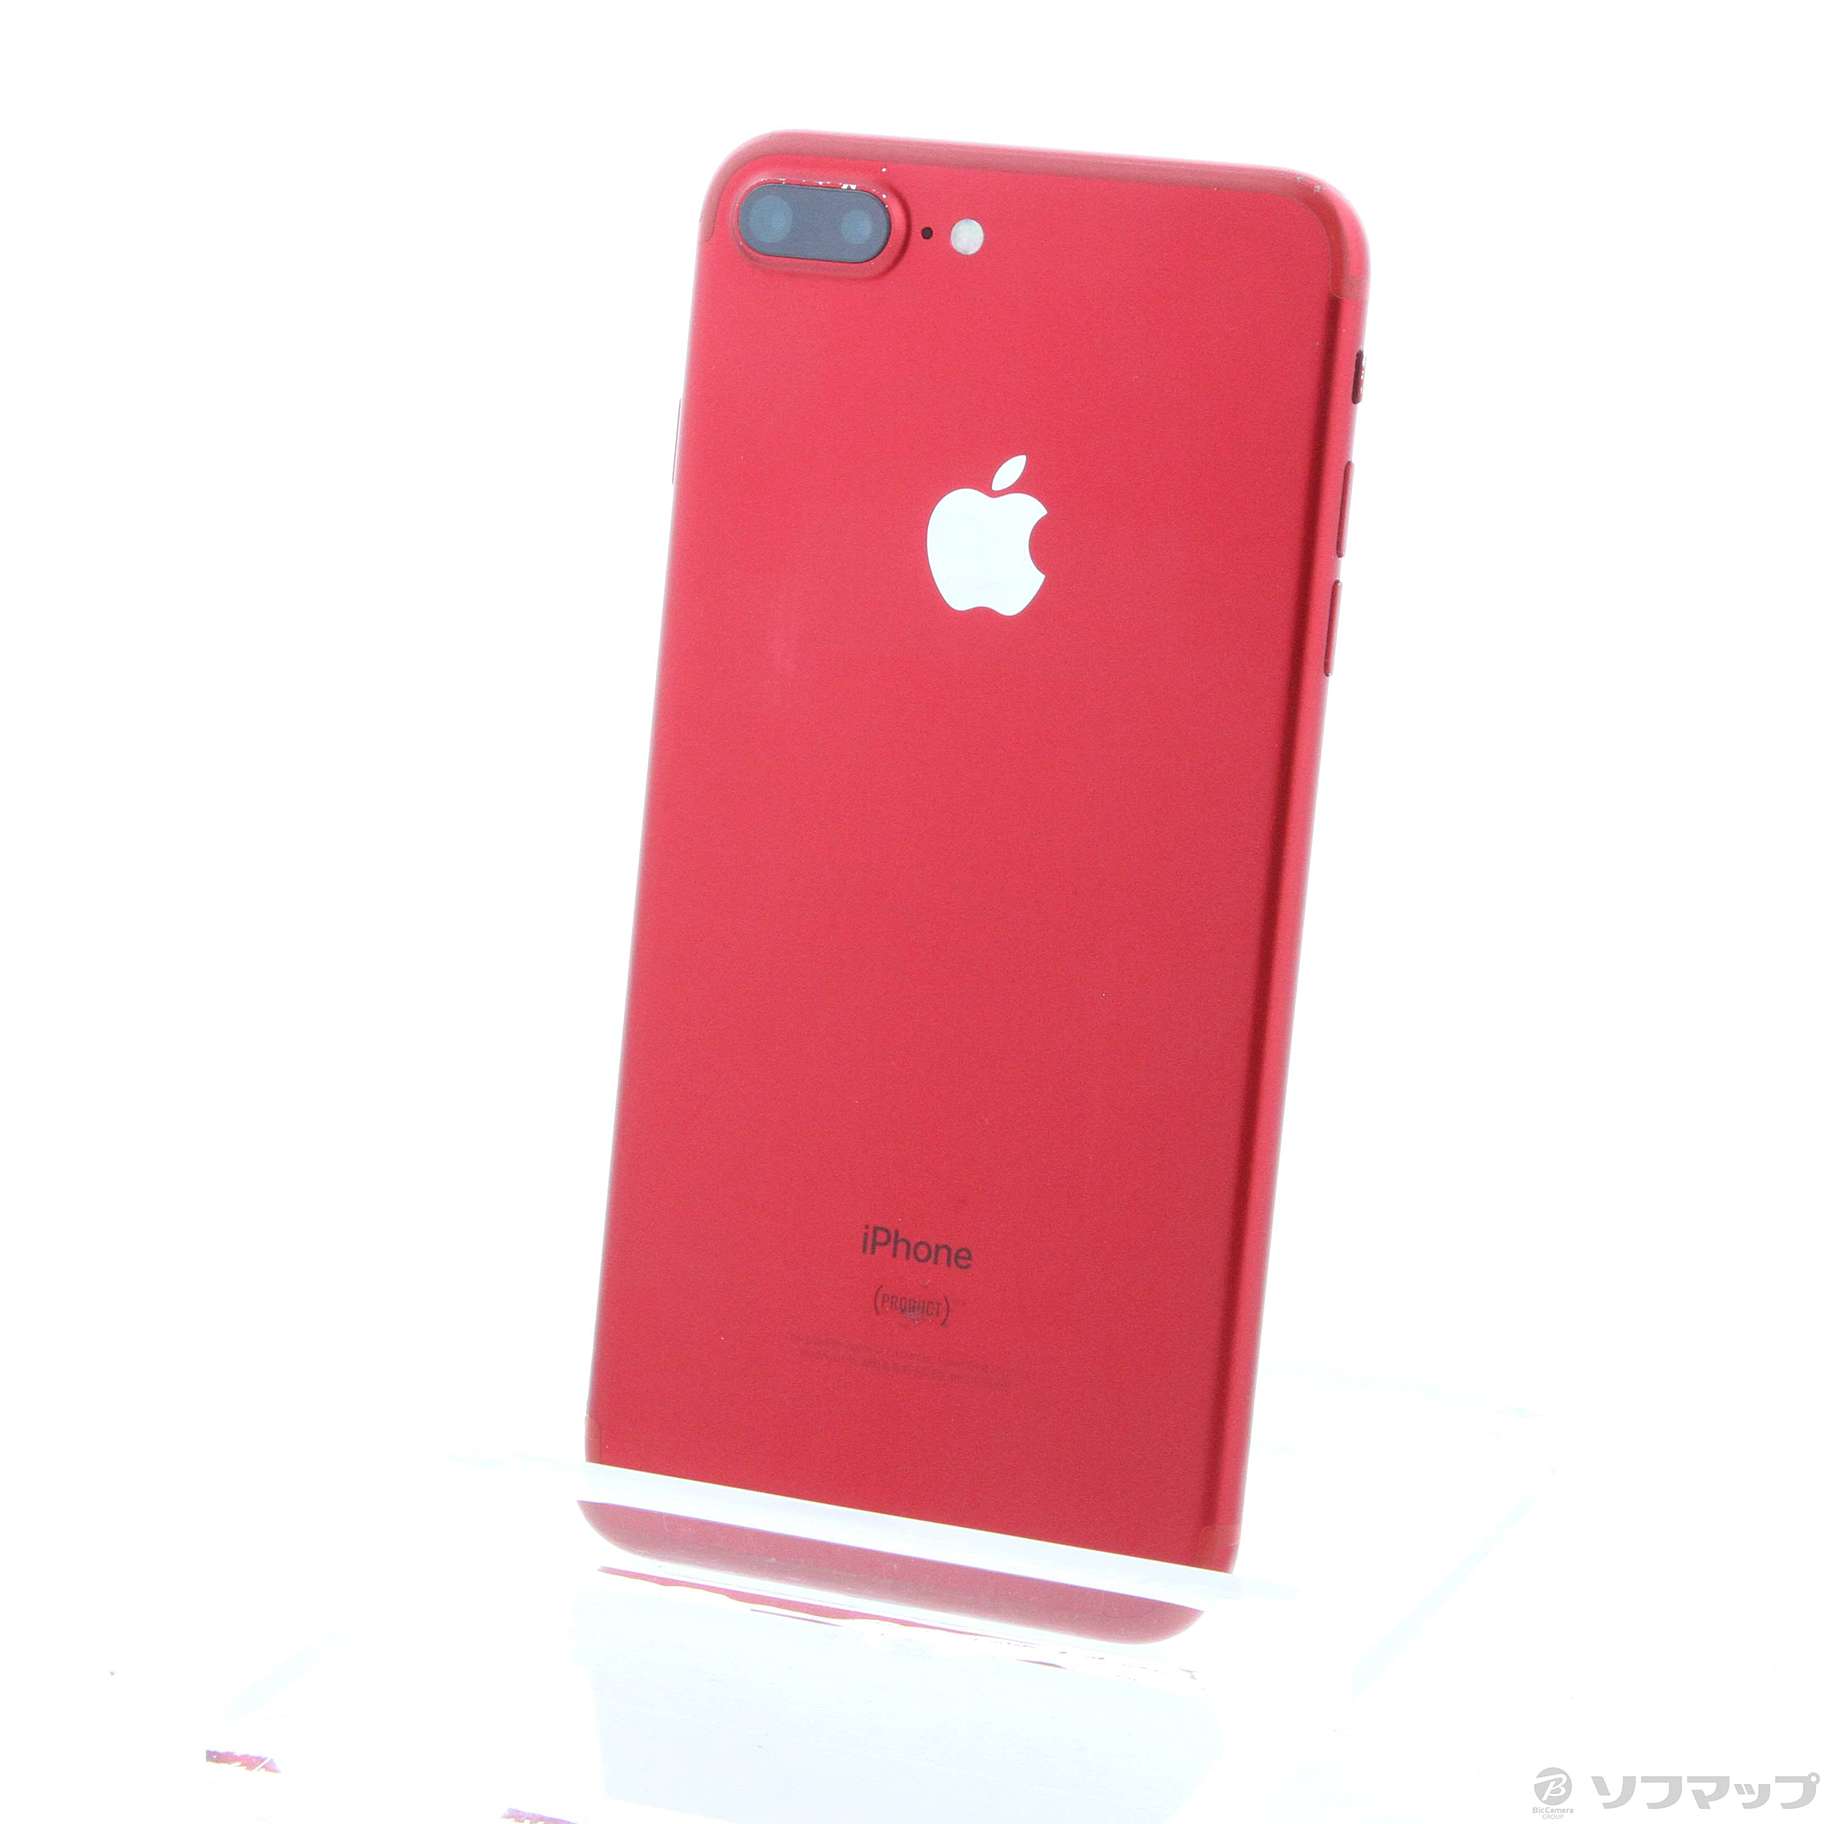 iphone 7(product)red 128GB SIMフリー-